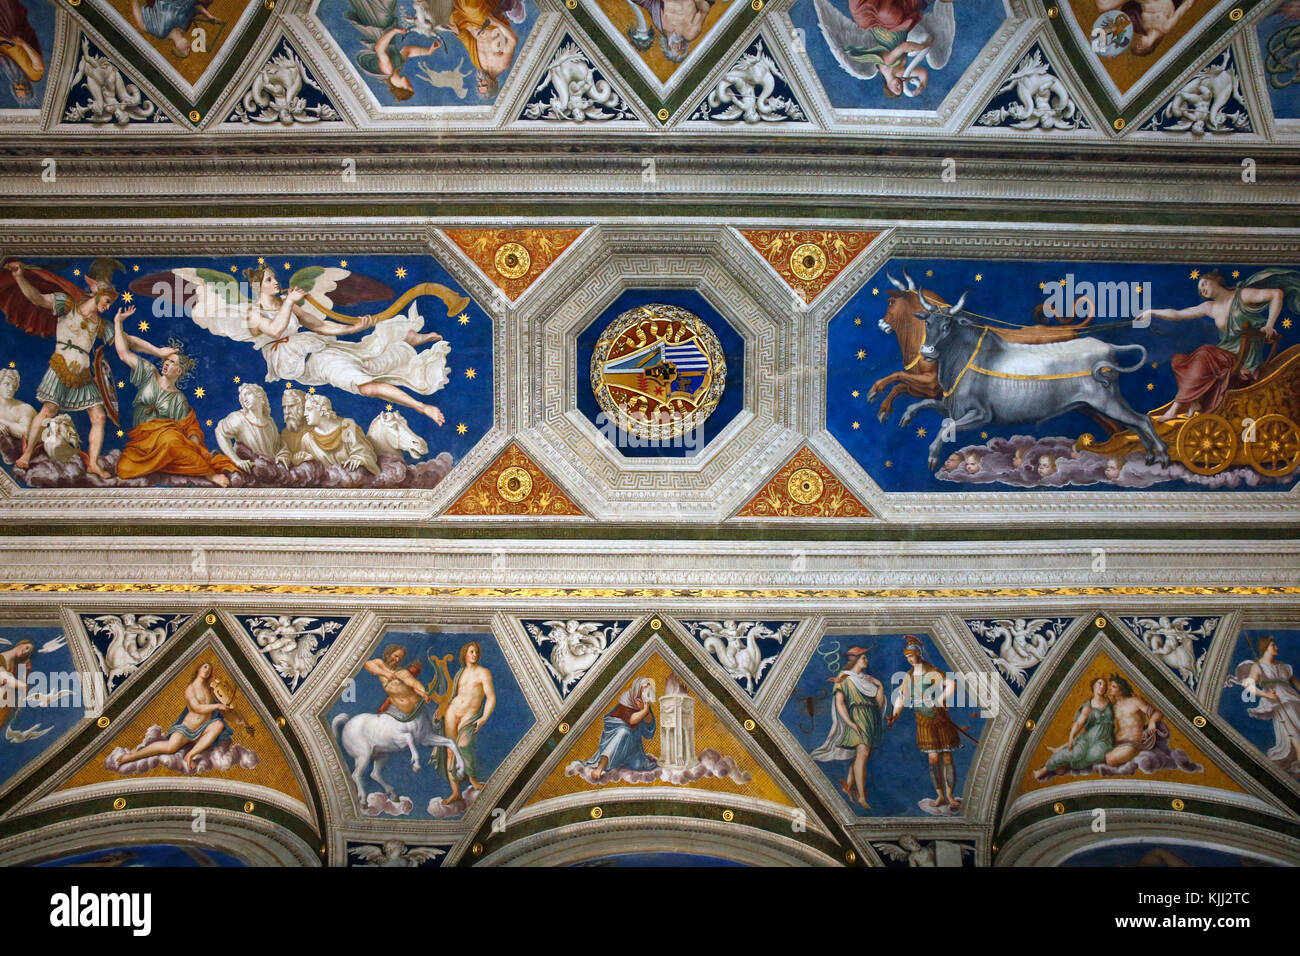 Villa Farnesina, Rome. The Loggia of Galatea. Ceiling frescoes by Baldassare Peruzzi. Myths of Perseus and Callisto. Italy. Stock Photo